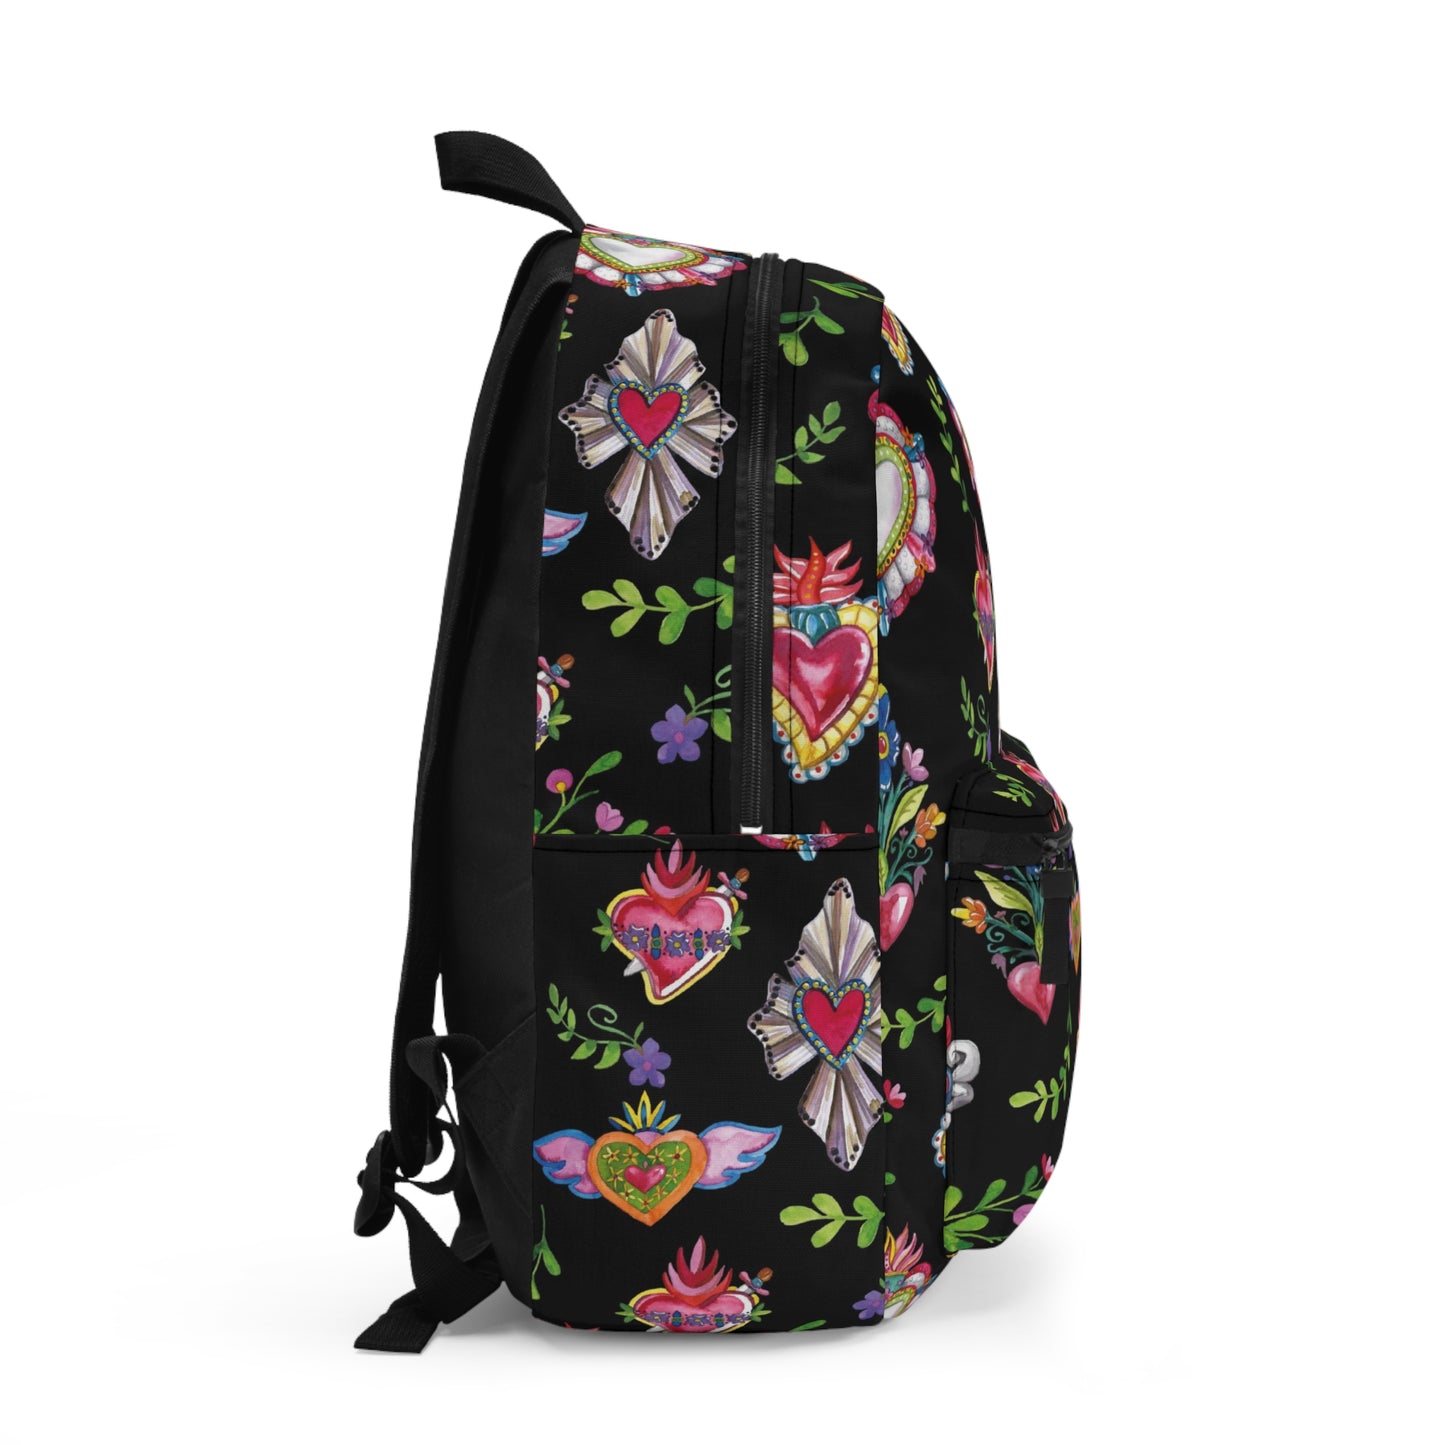 Sacred hearts Backpack for her or him. Mexican folk bag.